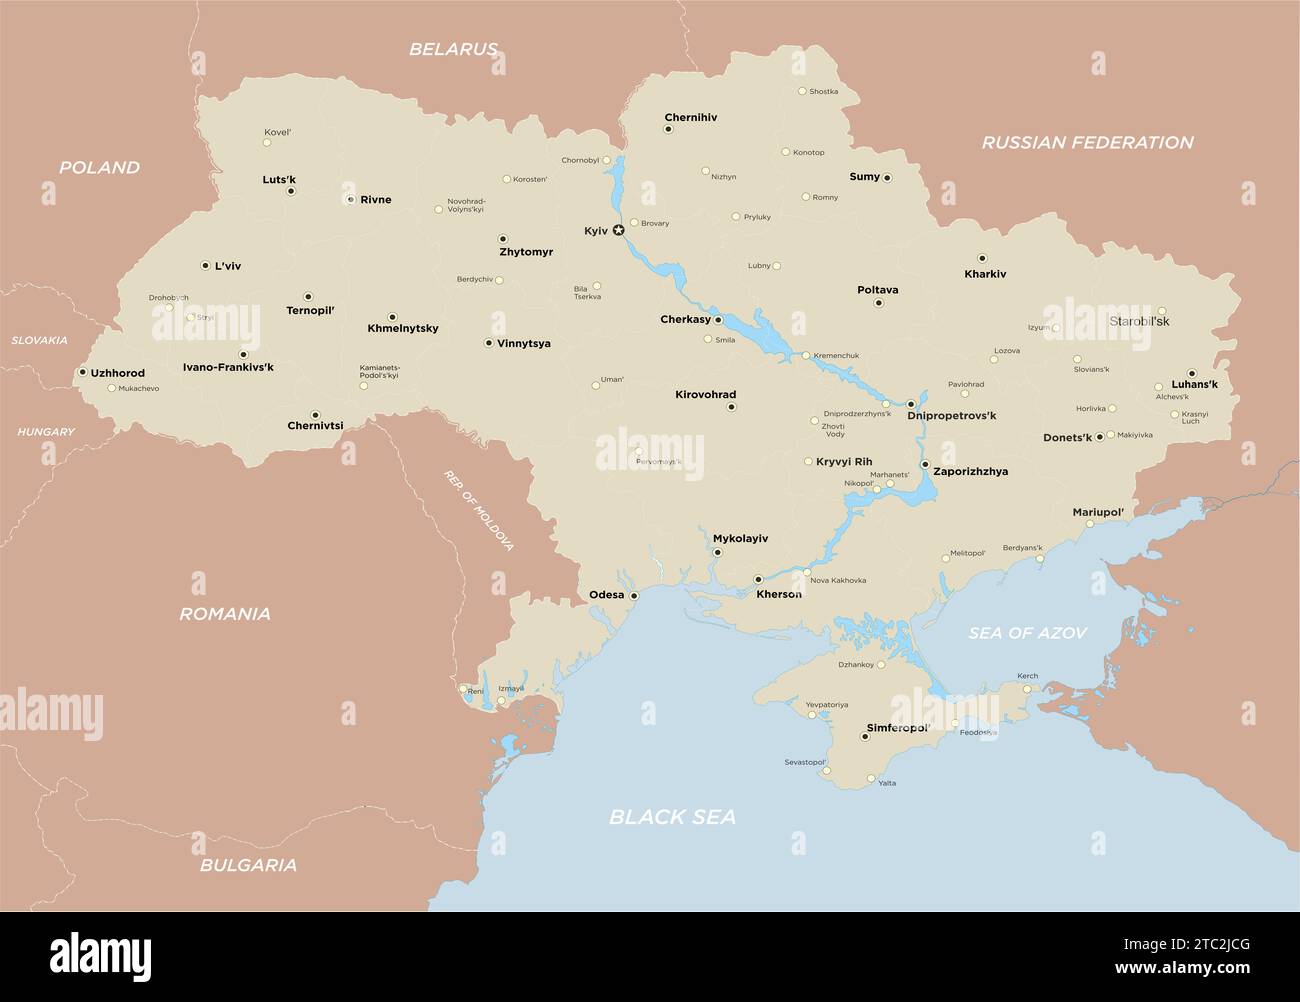 Detailed map of Ukraine with cities, rivers, regions, seas. Ukraine and neighboring countries. Stock Photo